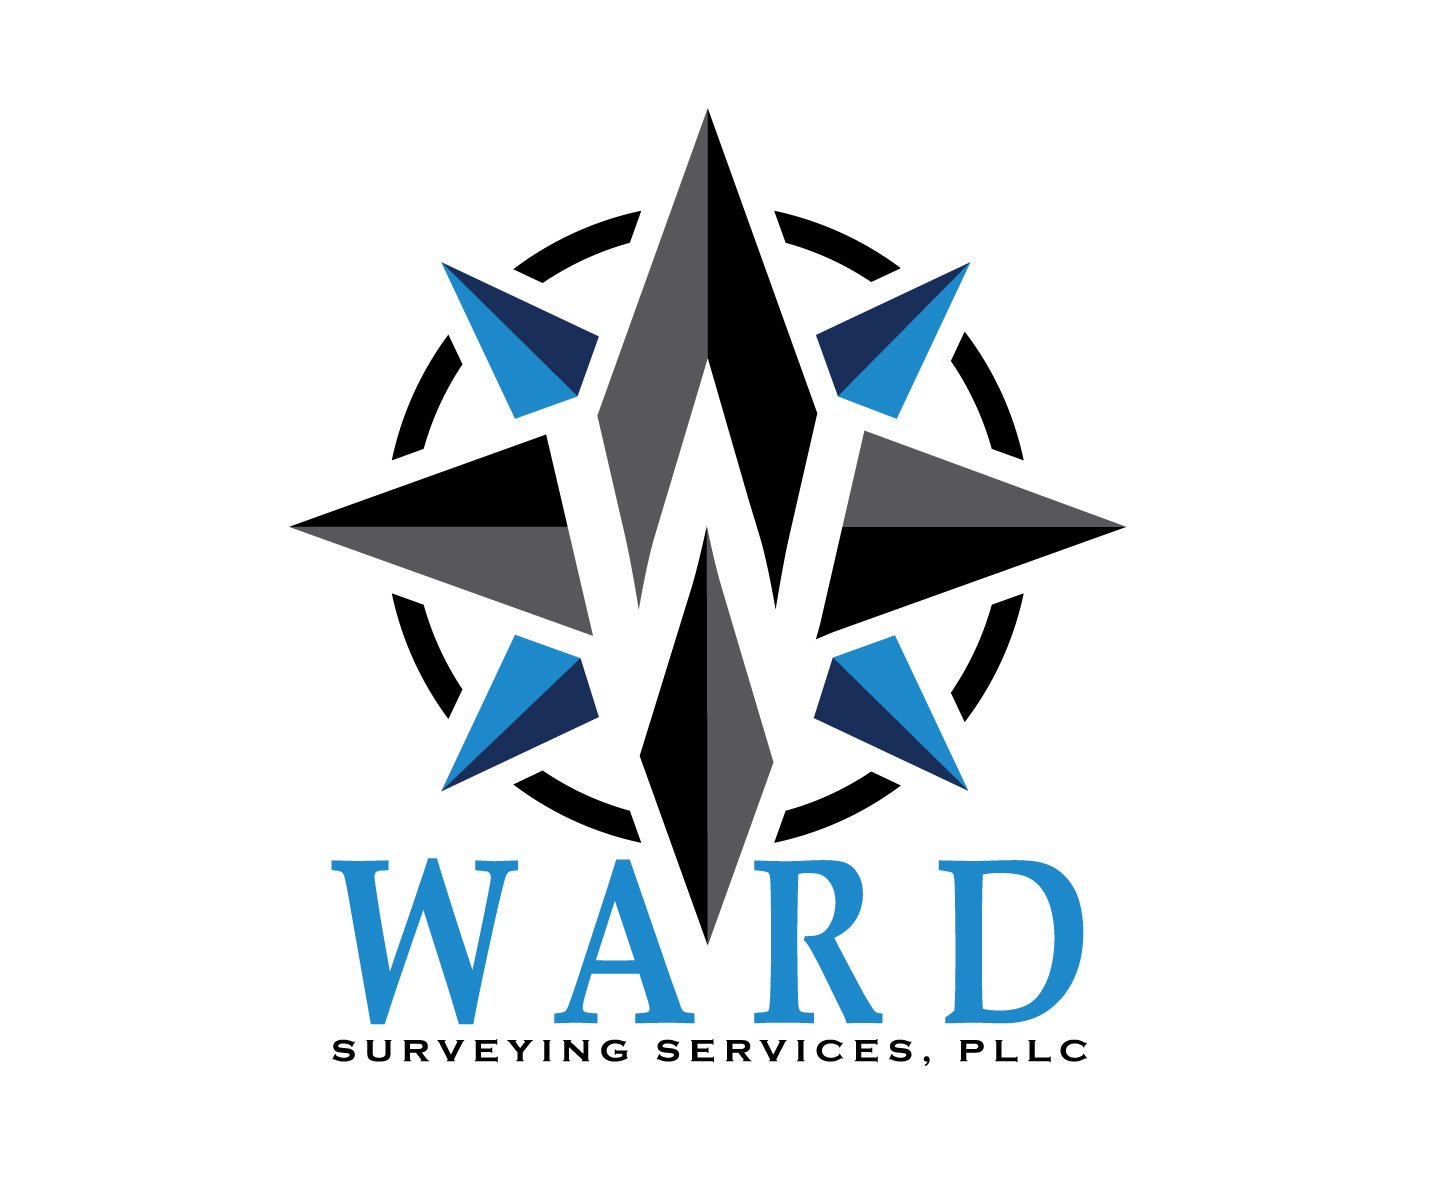 Ward Surveying Services, PLLC